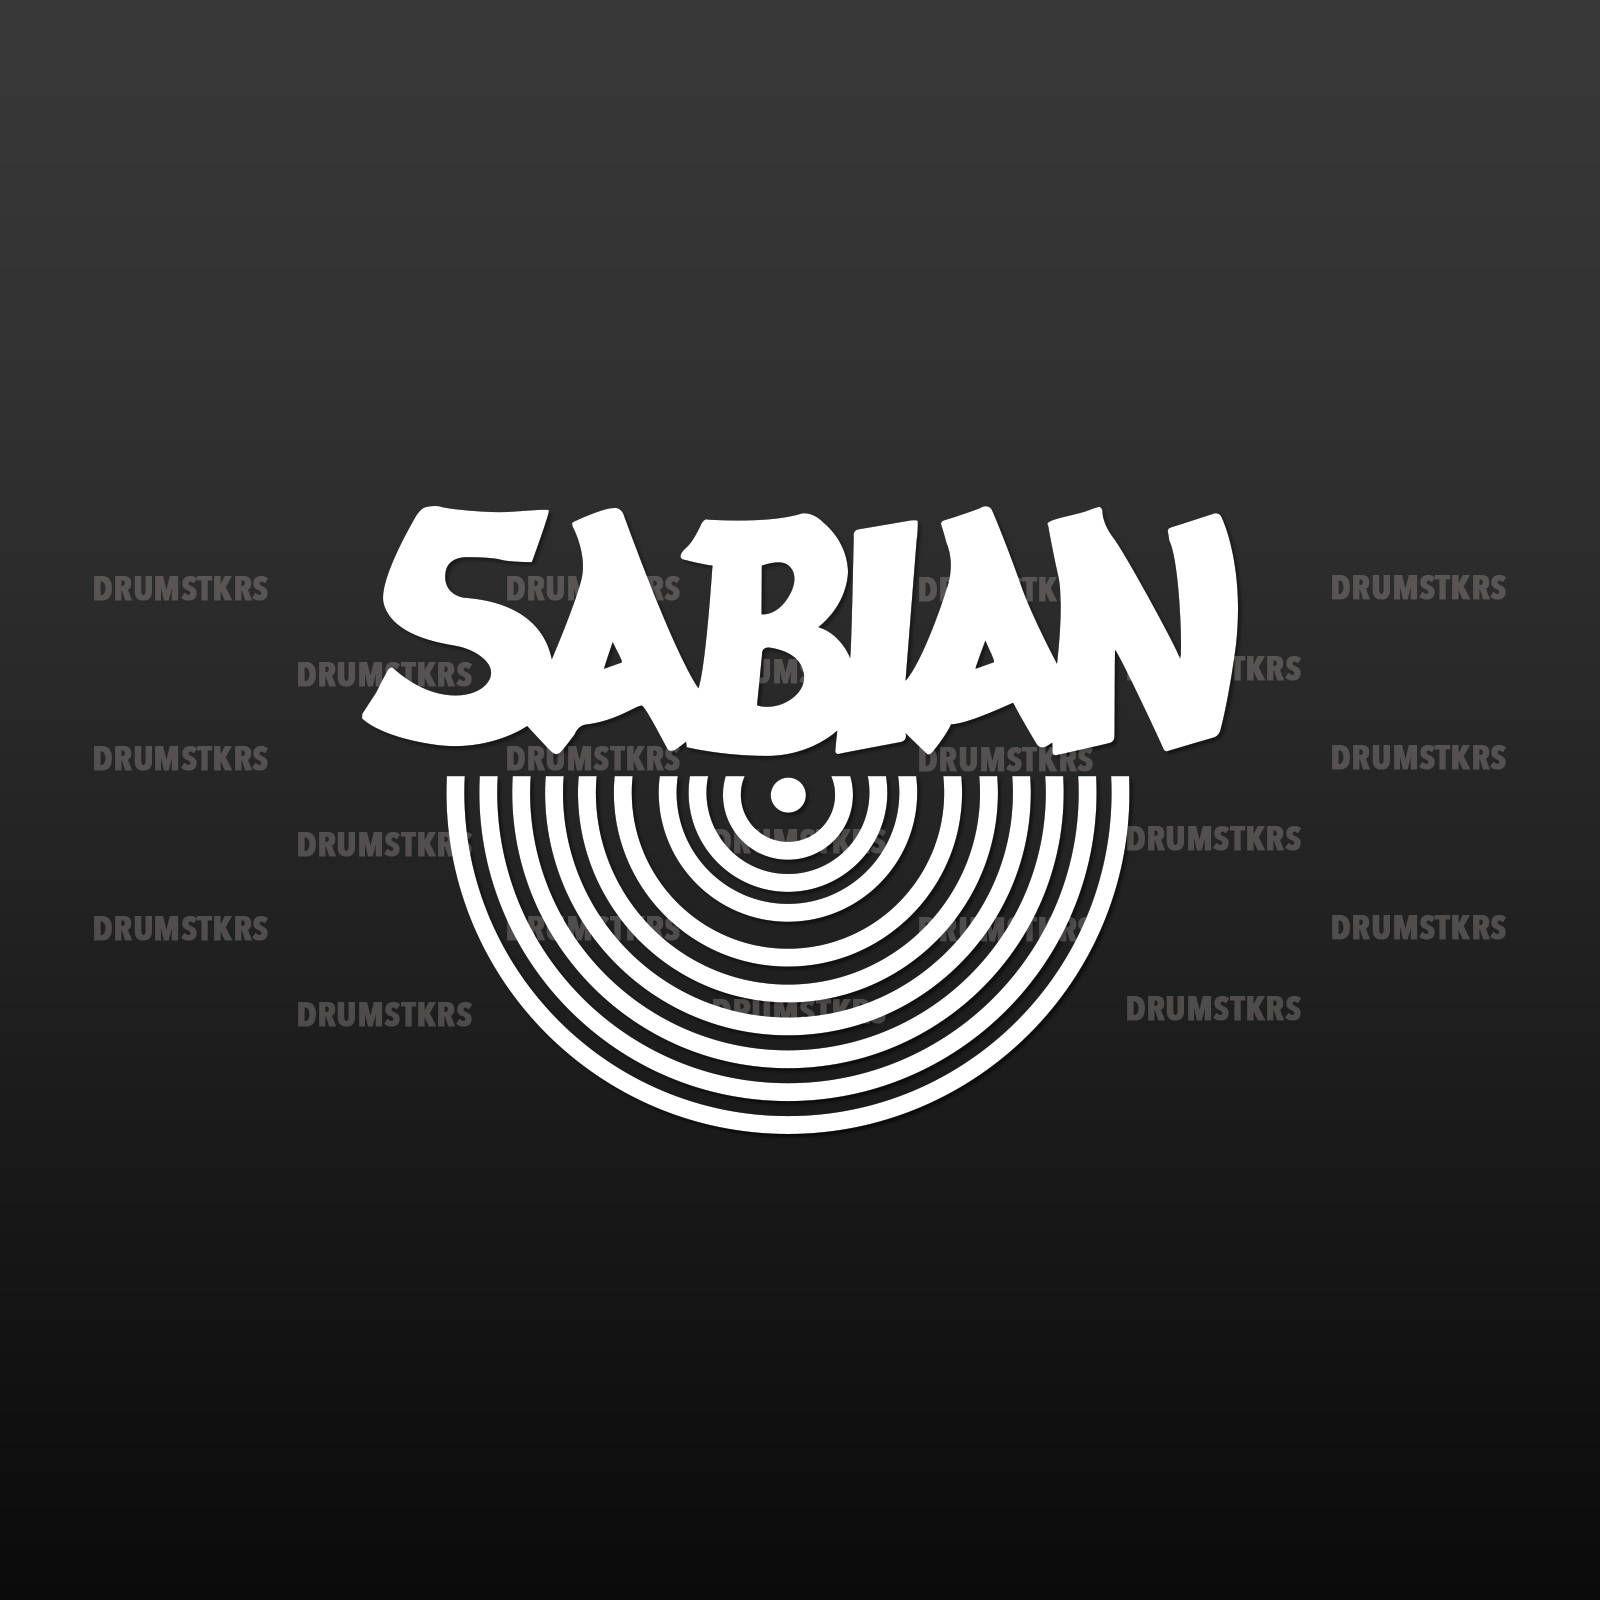 Sabian Logo - Sabian Cymbals logo for Bass Drum head